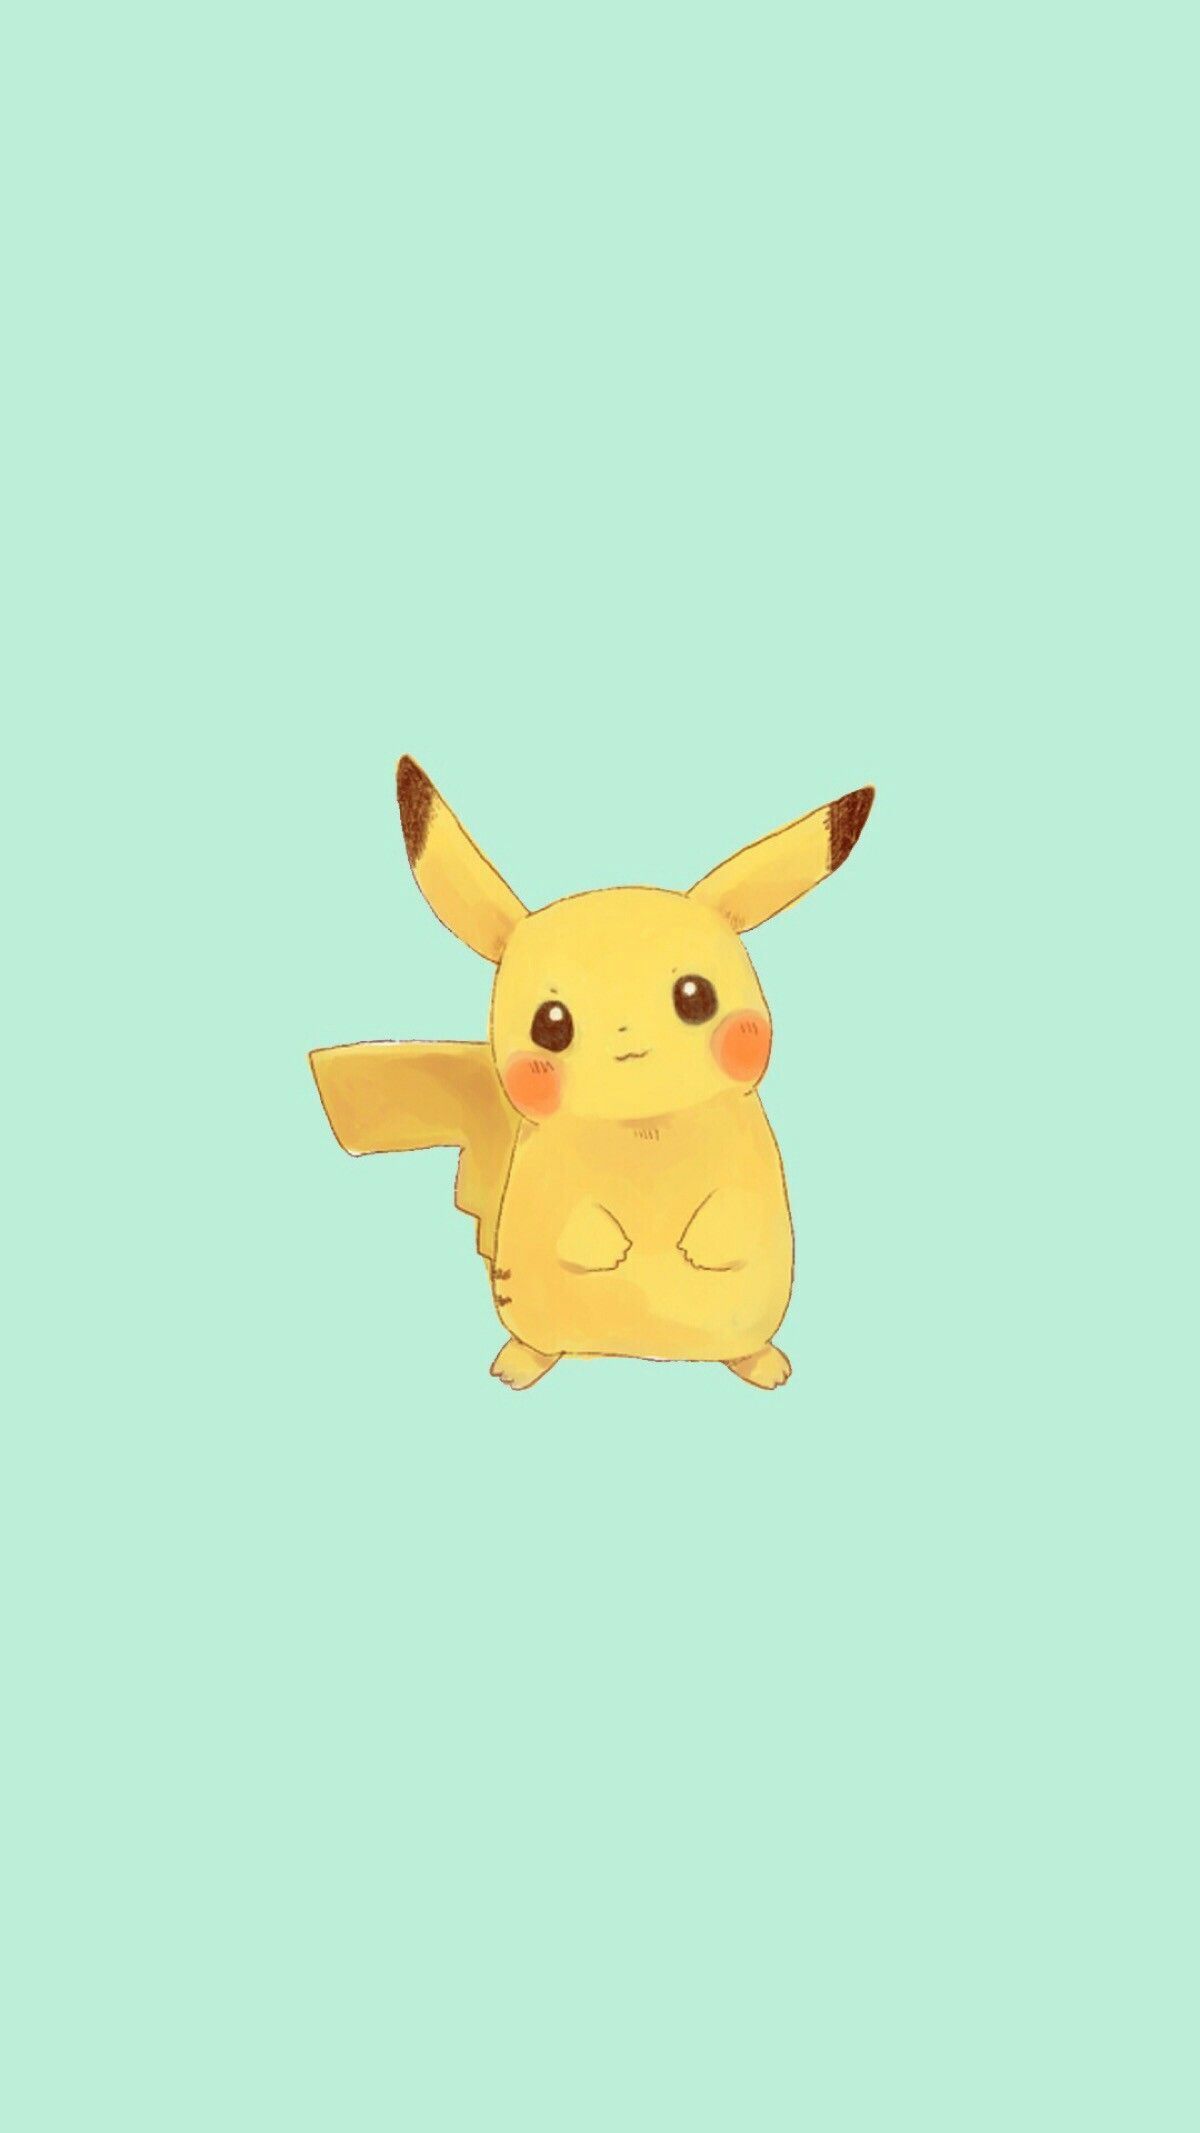 Pikachu wallpaper for your desktop - Pikachu